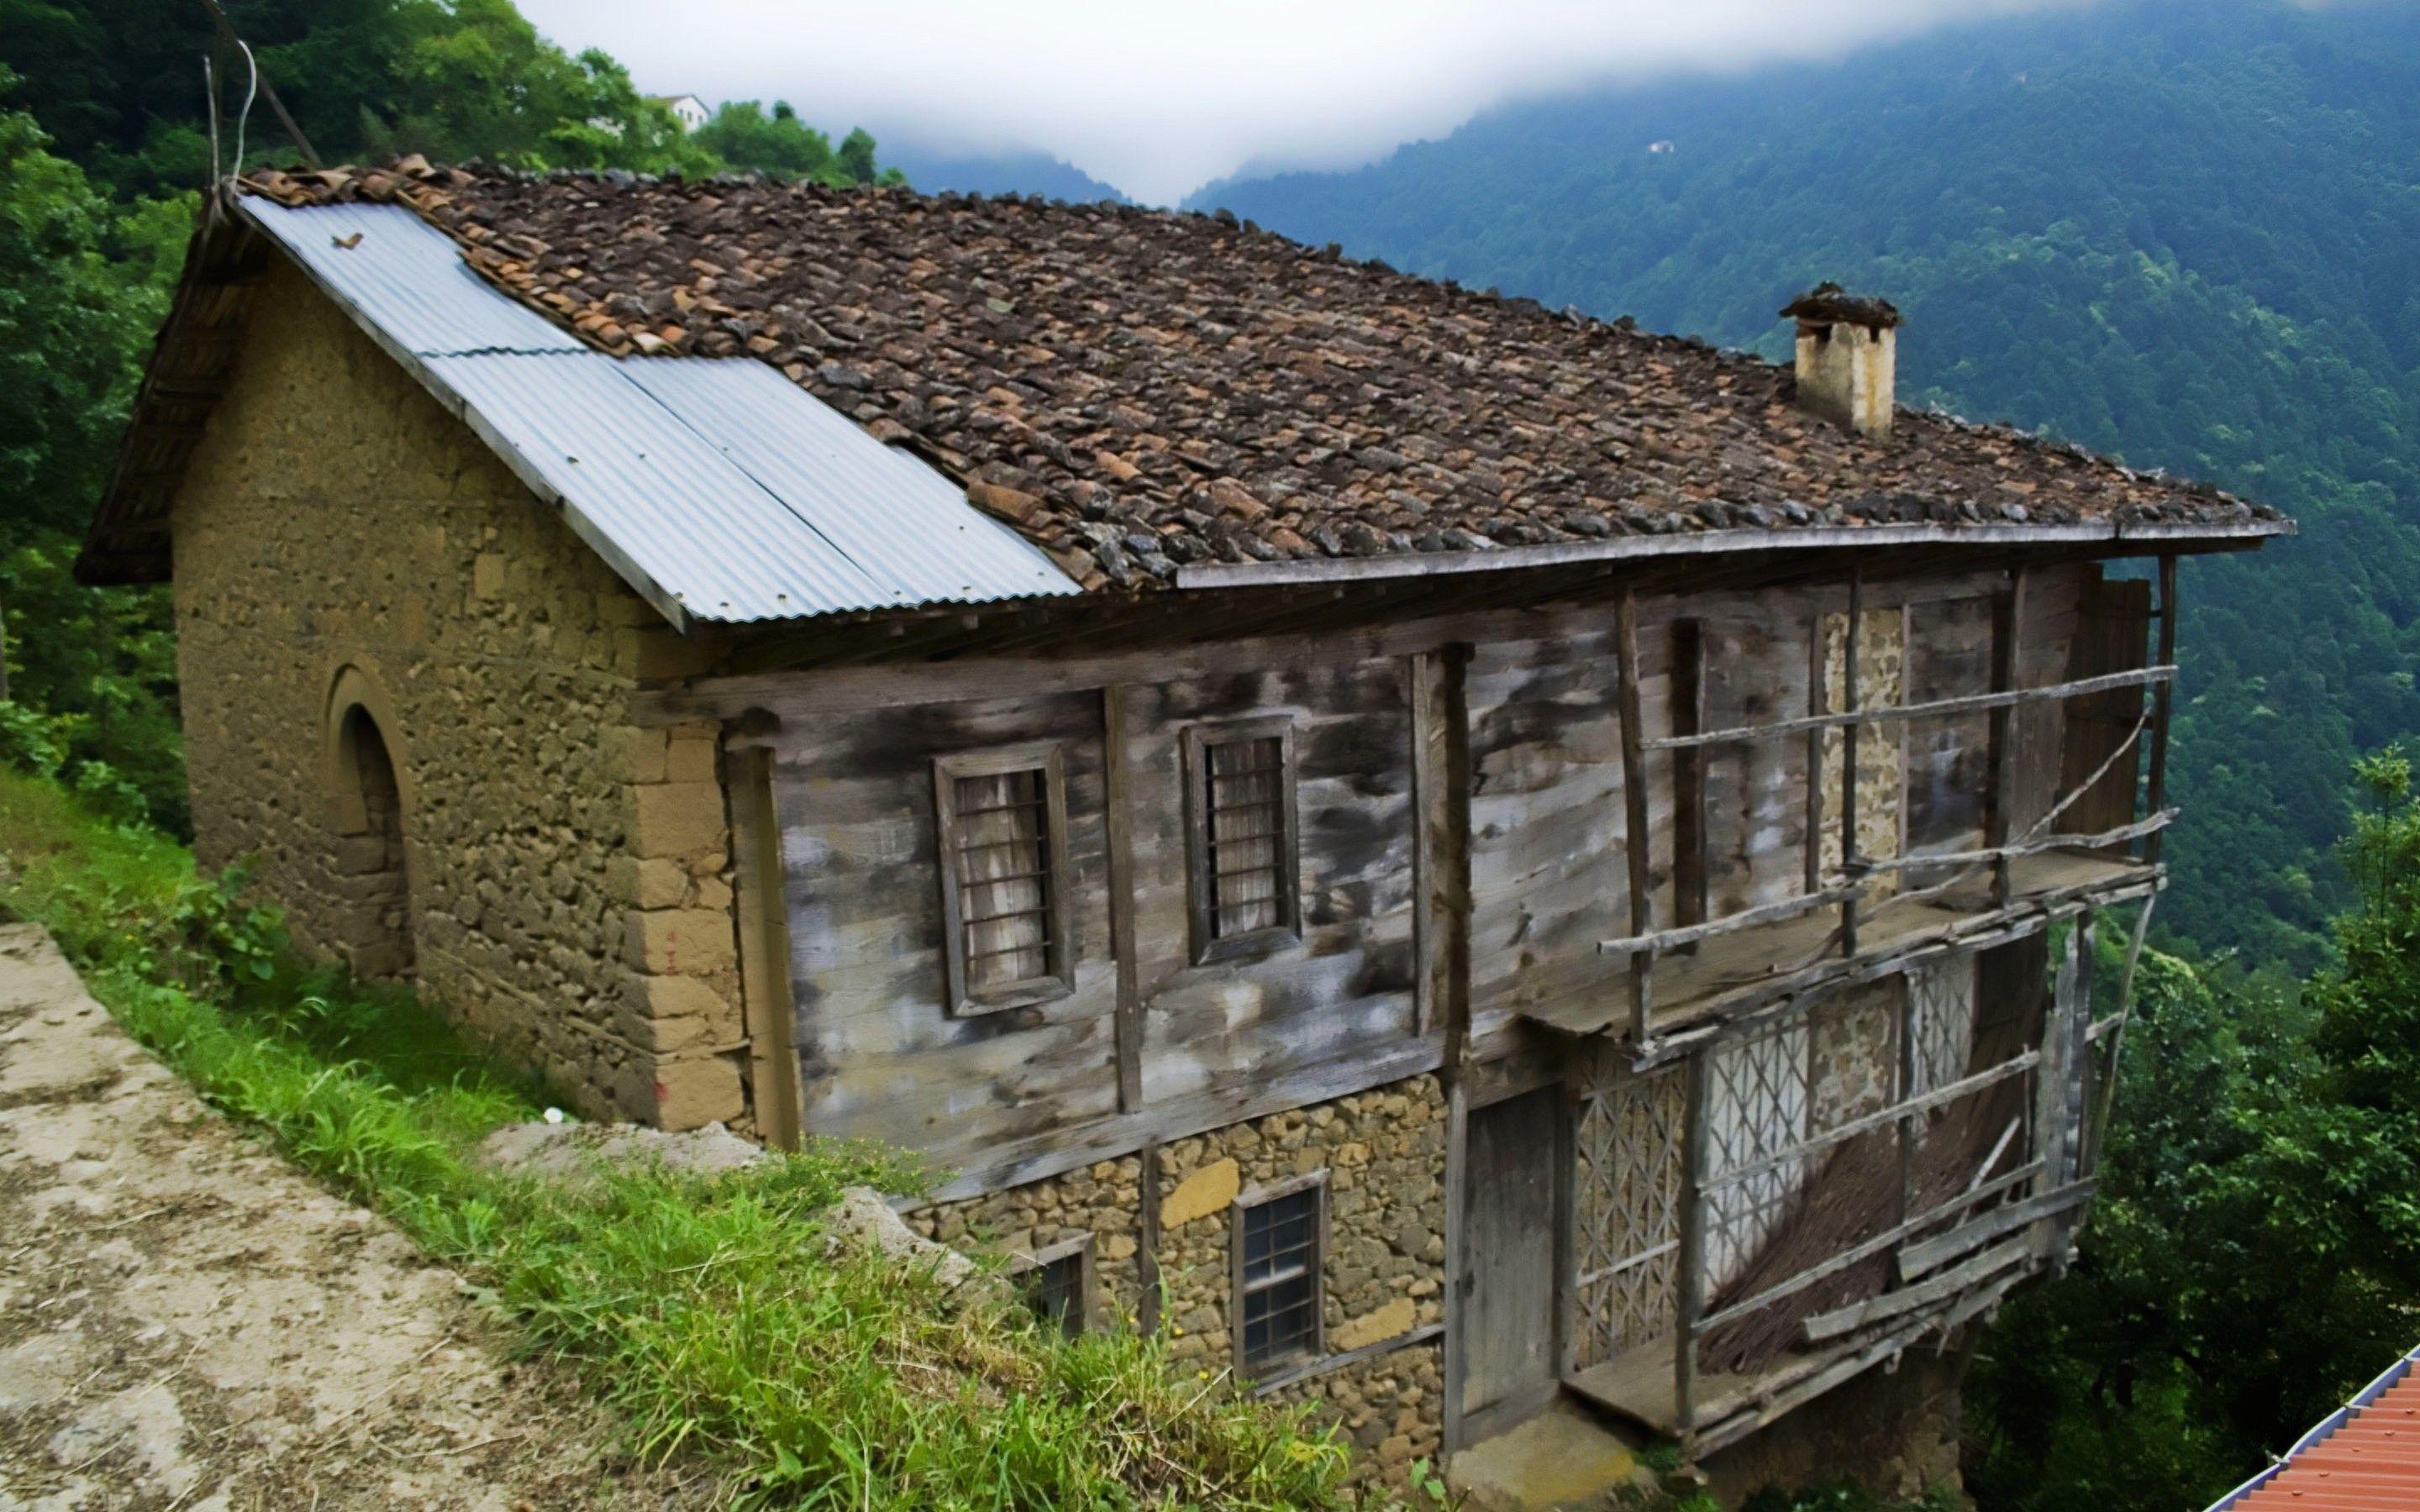 Old House In The Mountain Village, Turkey. European cities